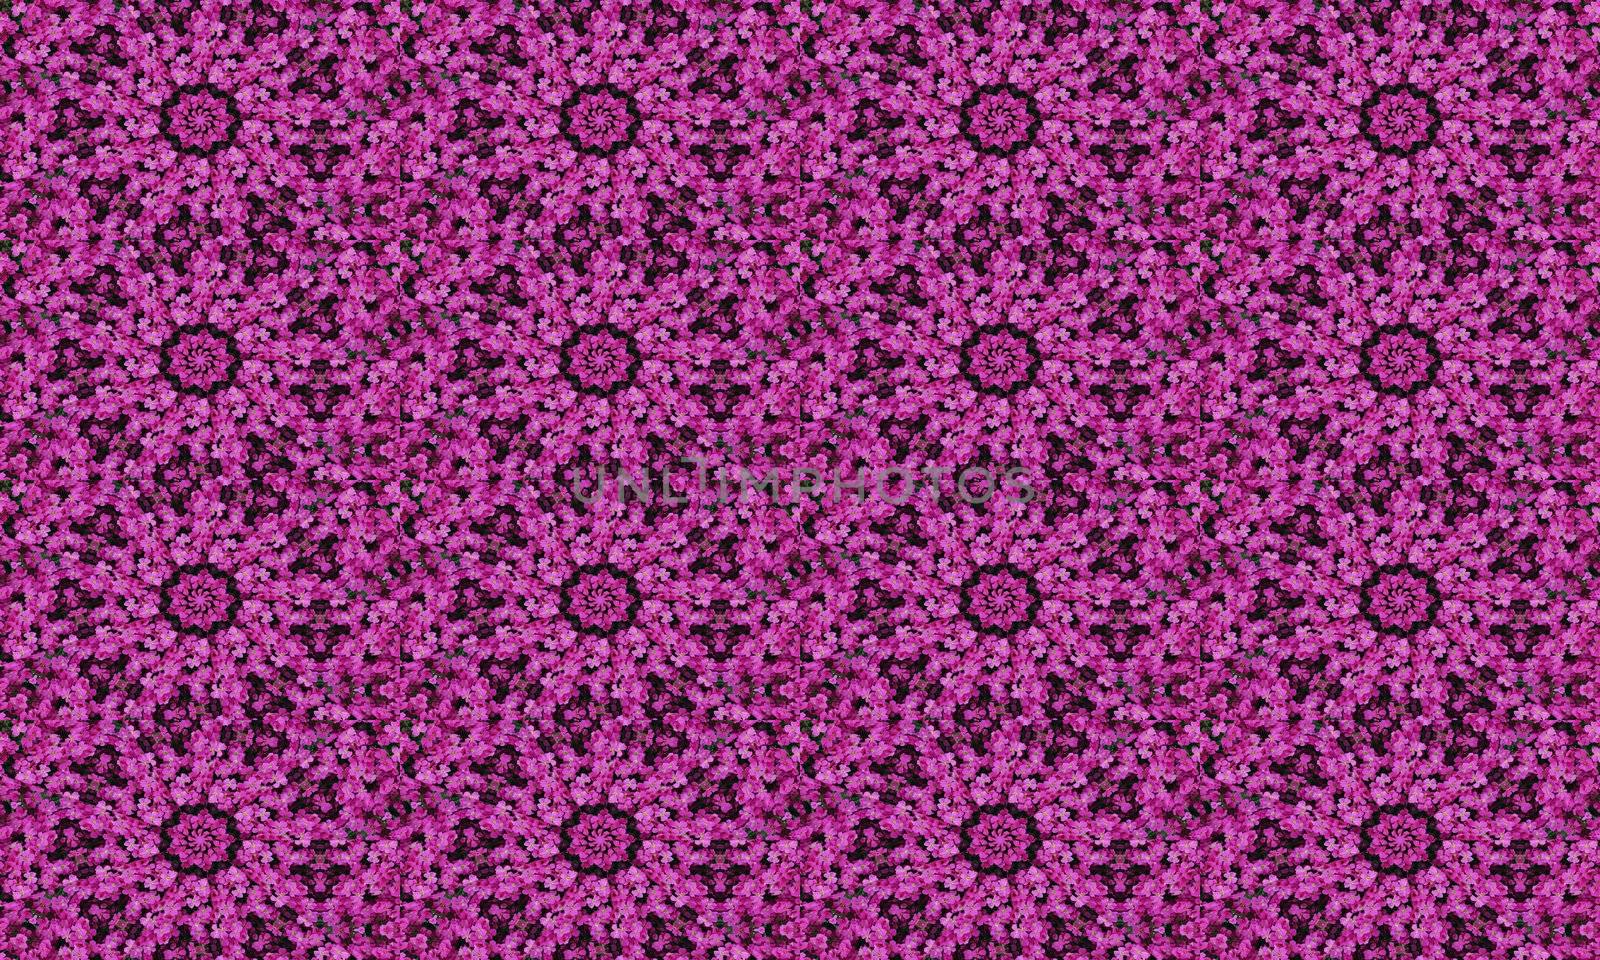 background/ tile based on a lobelia photo and with kaleidoscopic effect